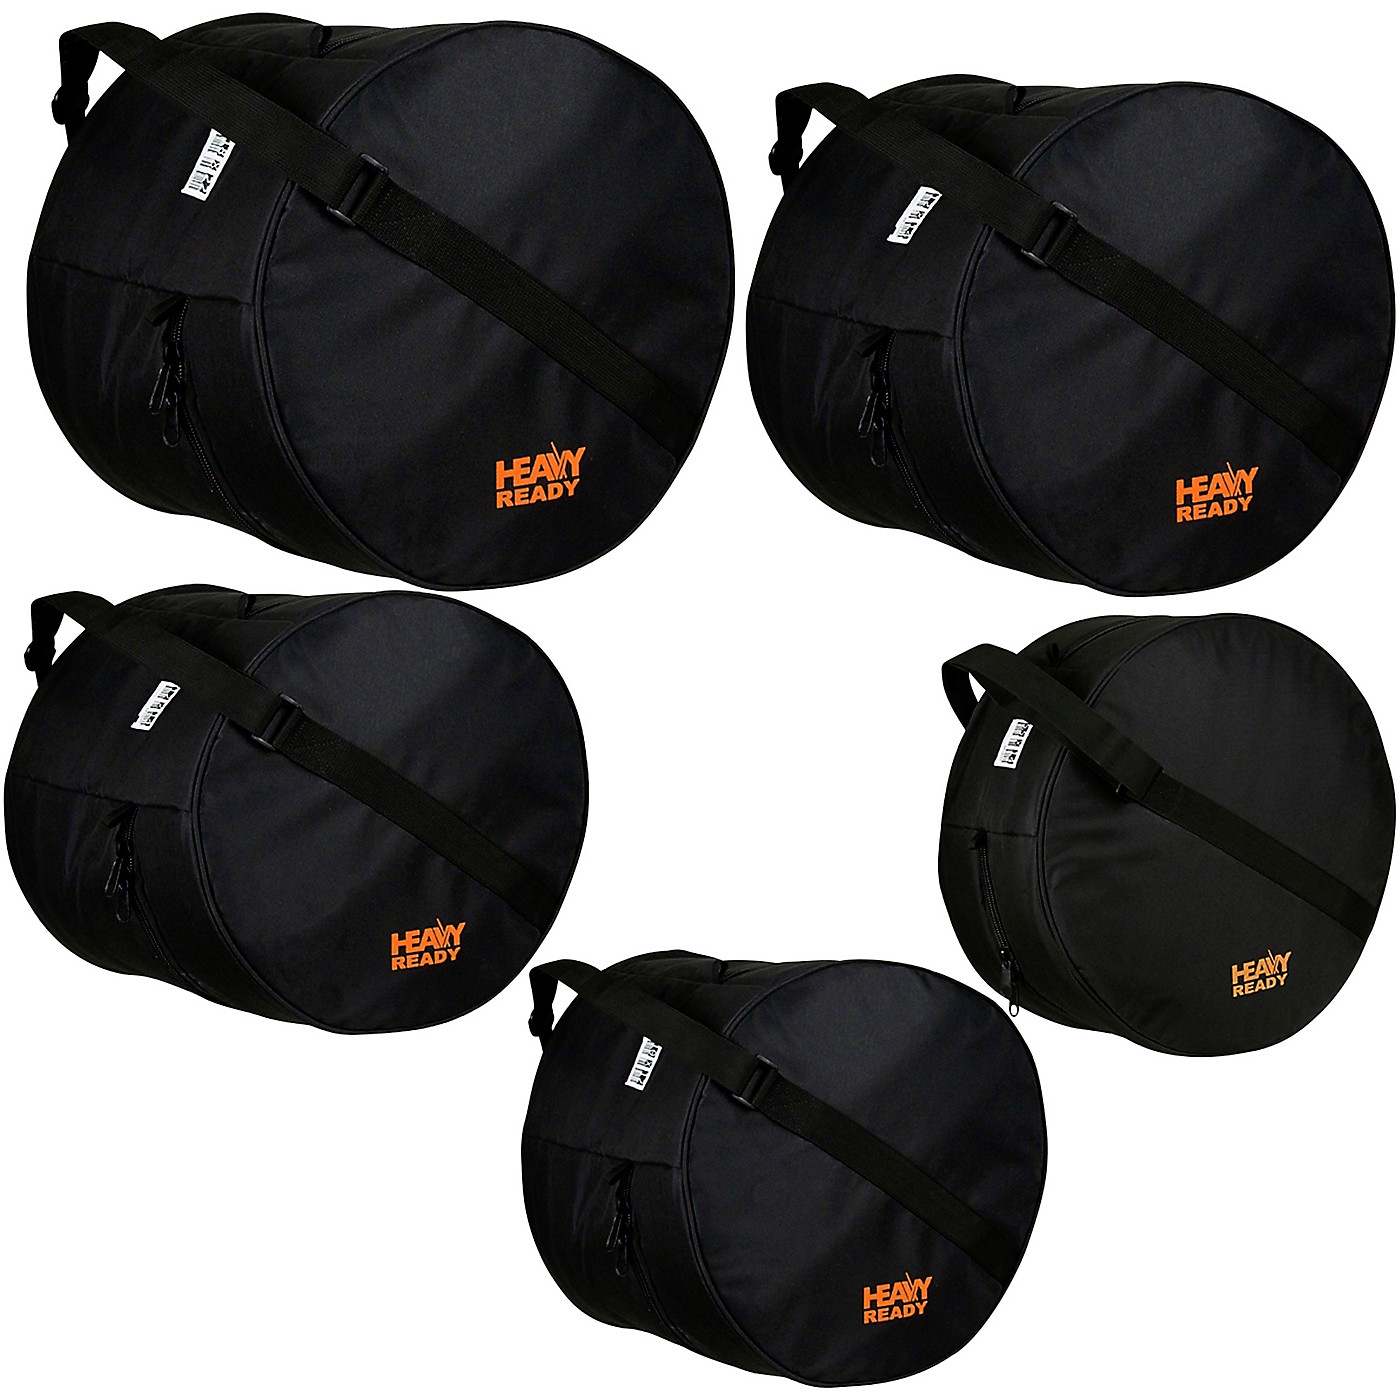 Protec Heavy Ready Series Standard 3 Drum Bag Set thumbnail